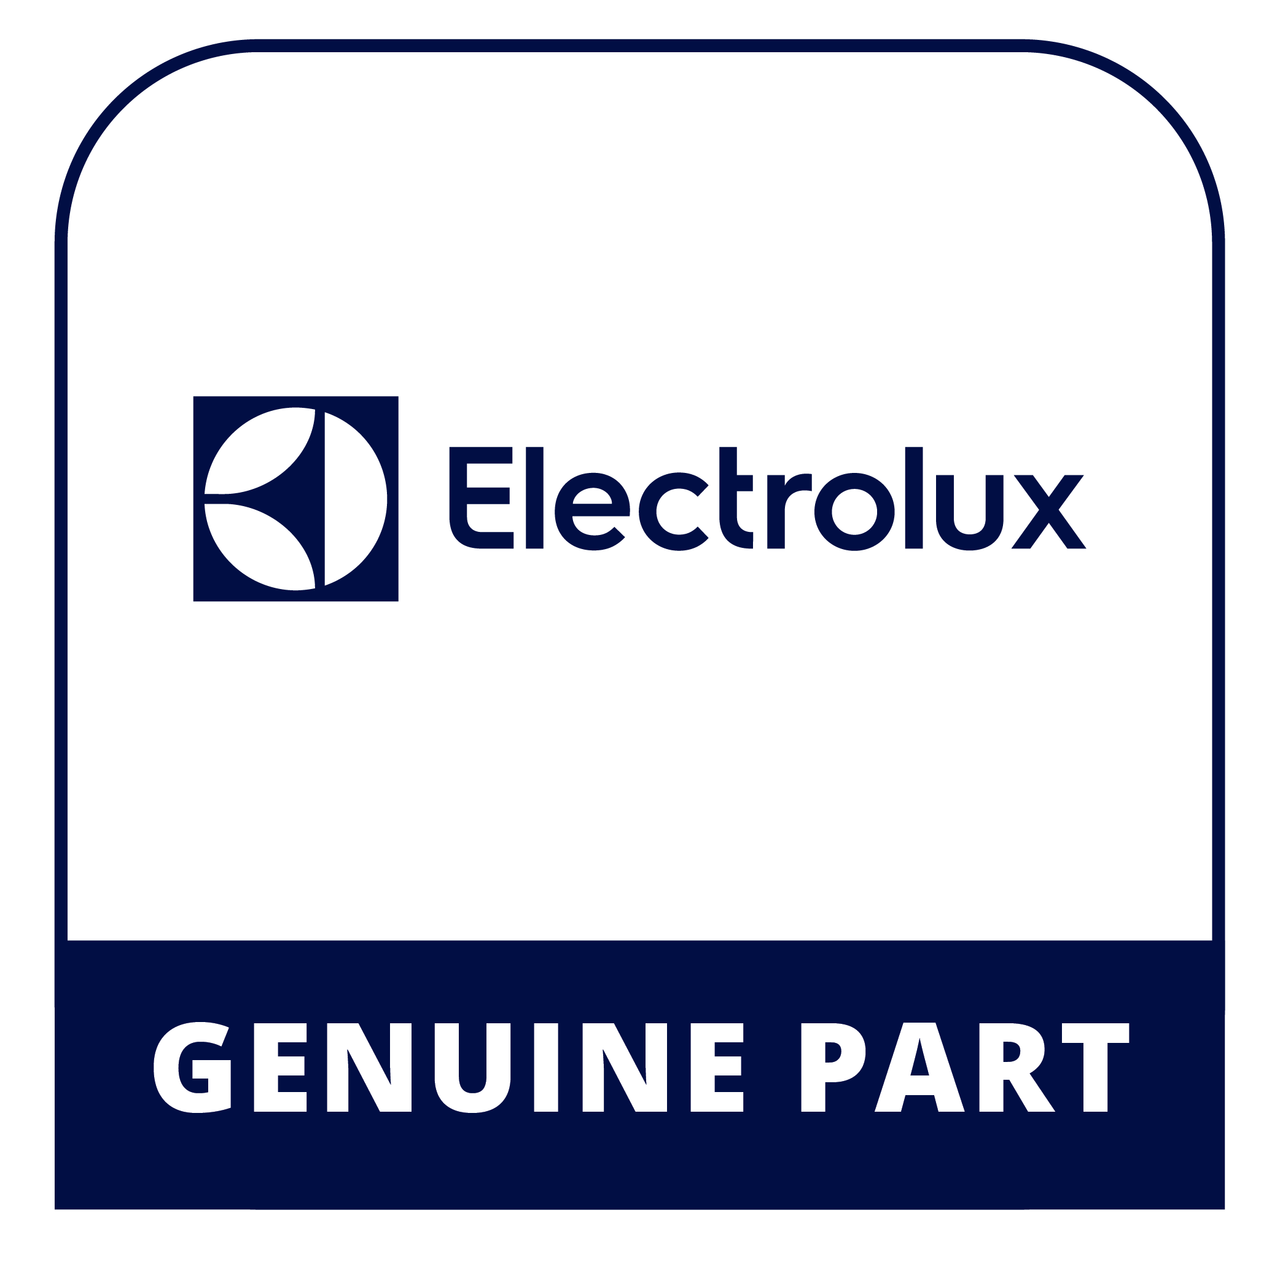 Frigidaire - Electrolux 318239701 Panel - Genuine Electrolux Part